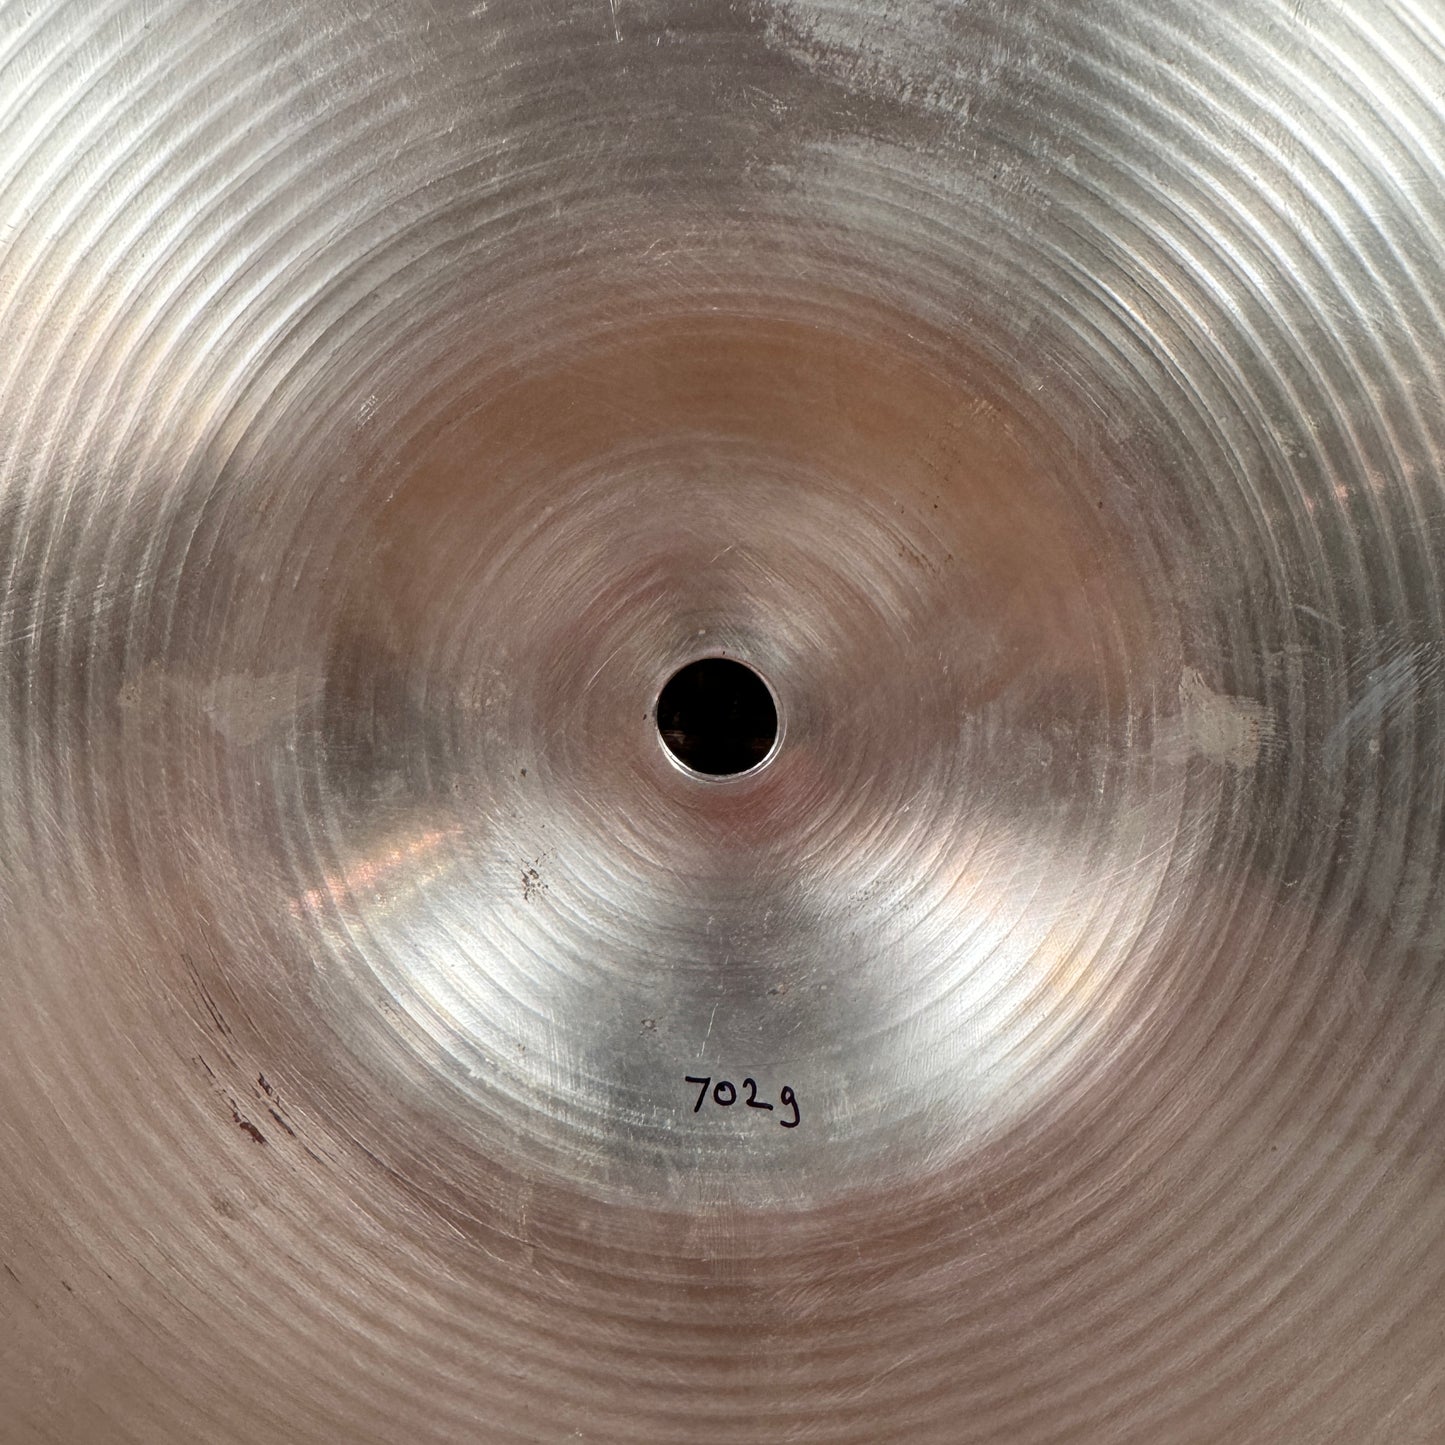 15" Paiste 1960s Ludwig Standard Crash / Hi-Hat Single Cymbal 702g Swiss